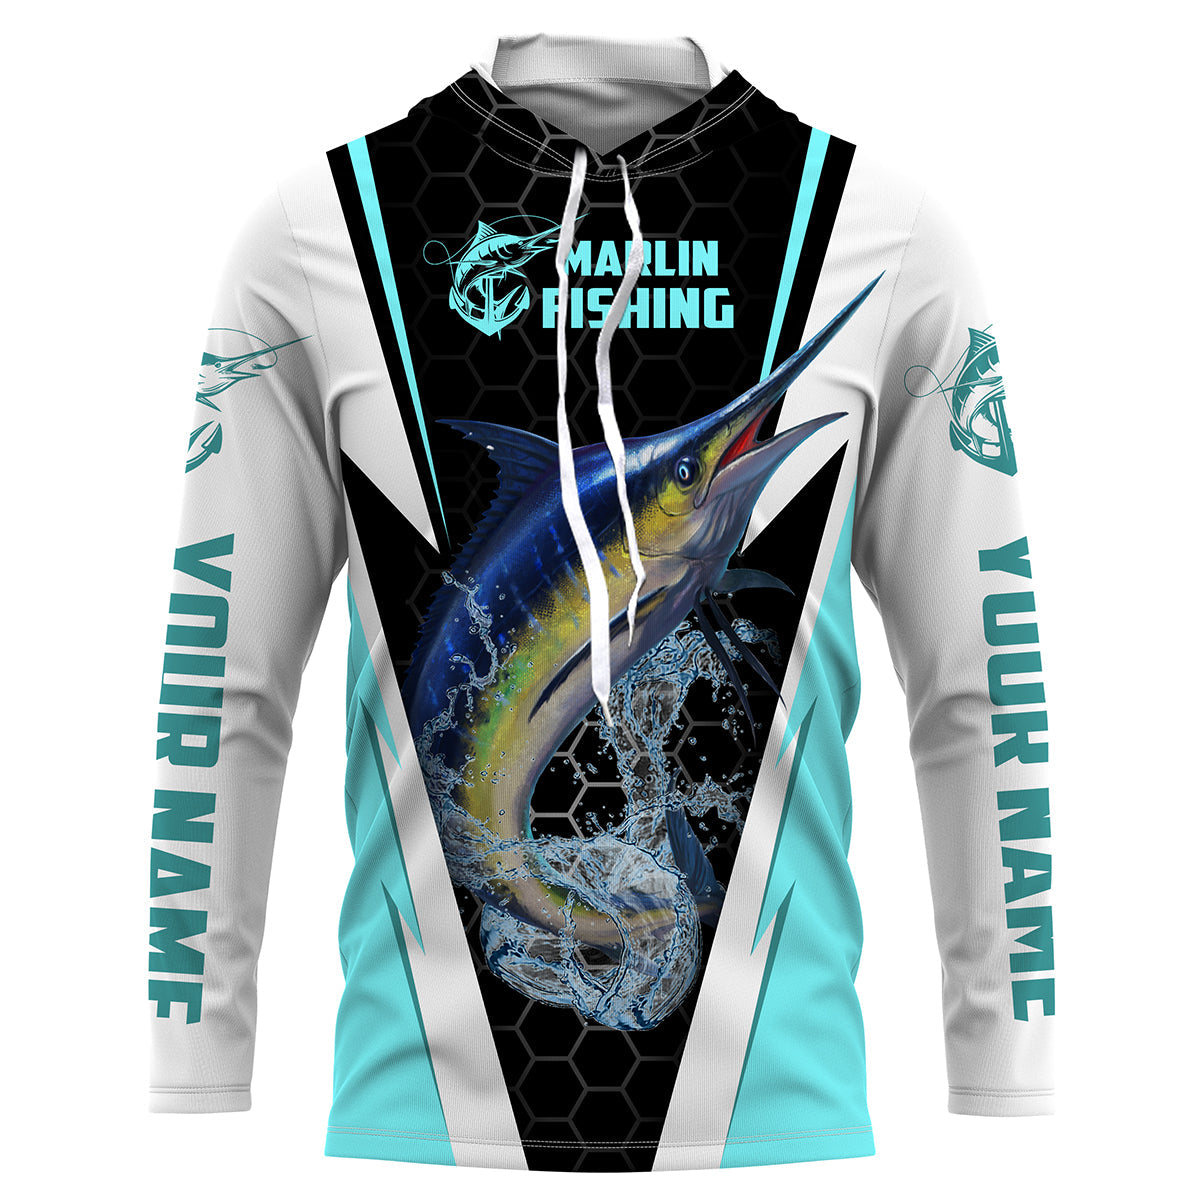 Personalized Marlin Fishing jerseys, Marlin Fishing Long Sleeve